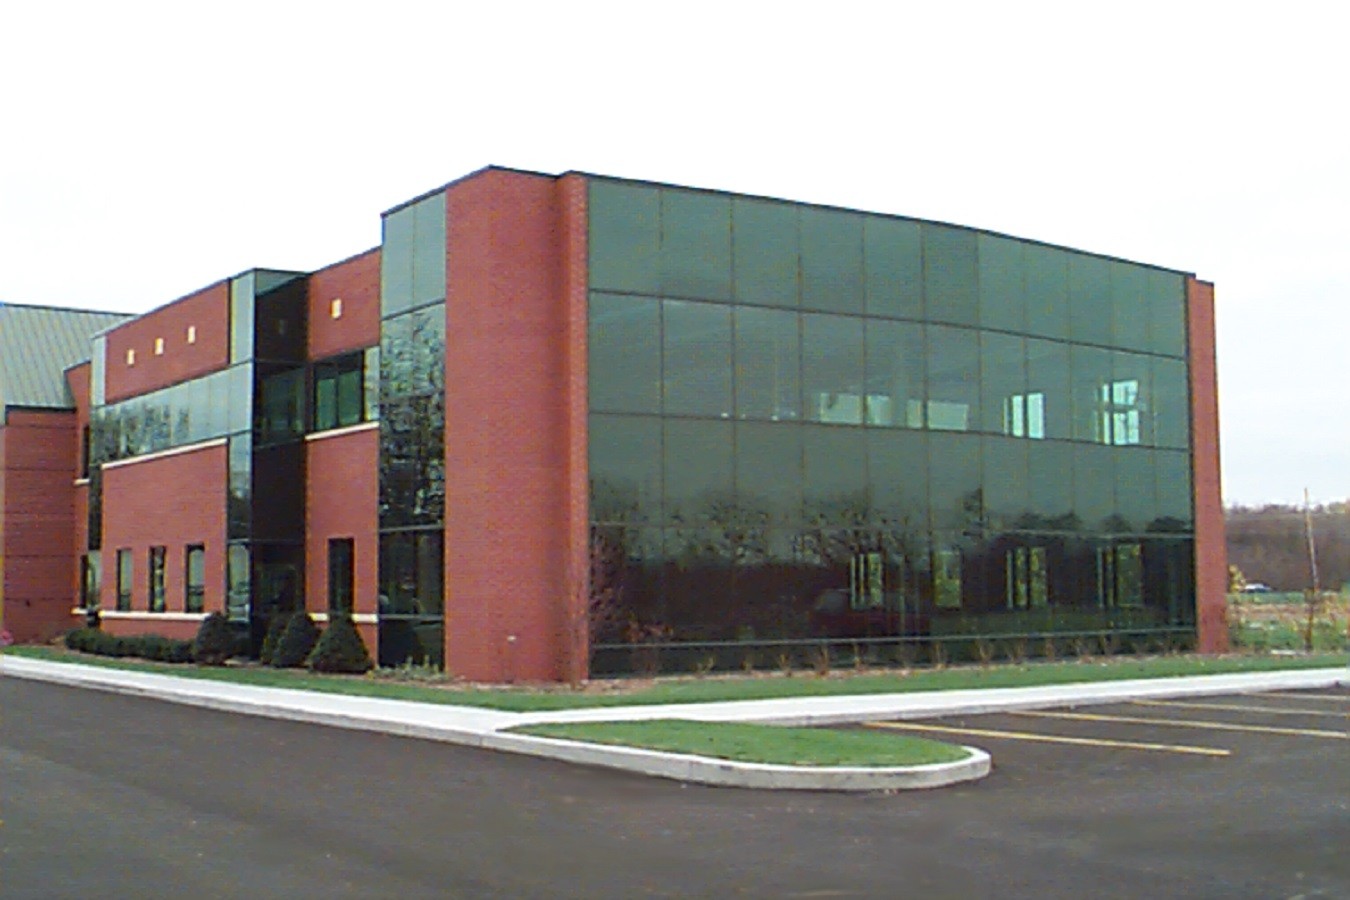 Commercial Building Architecture- Advanced Corporate Centre